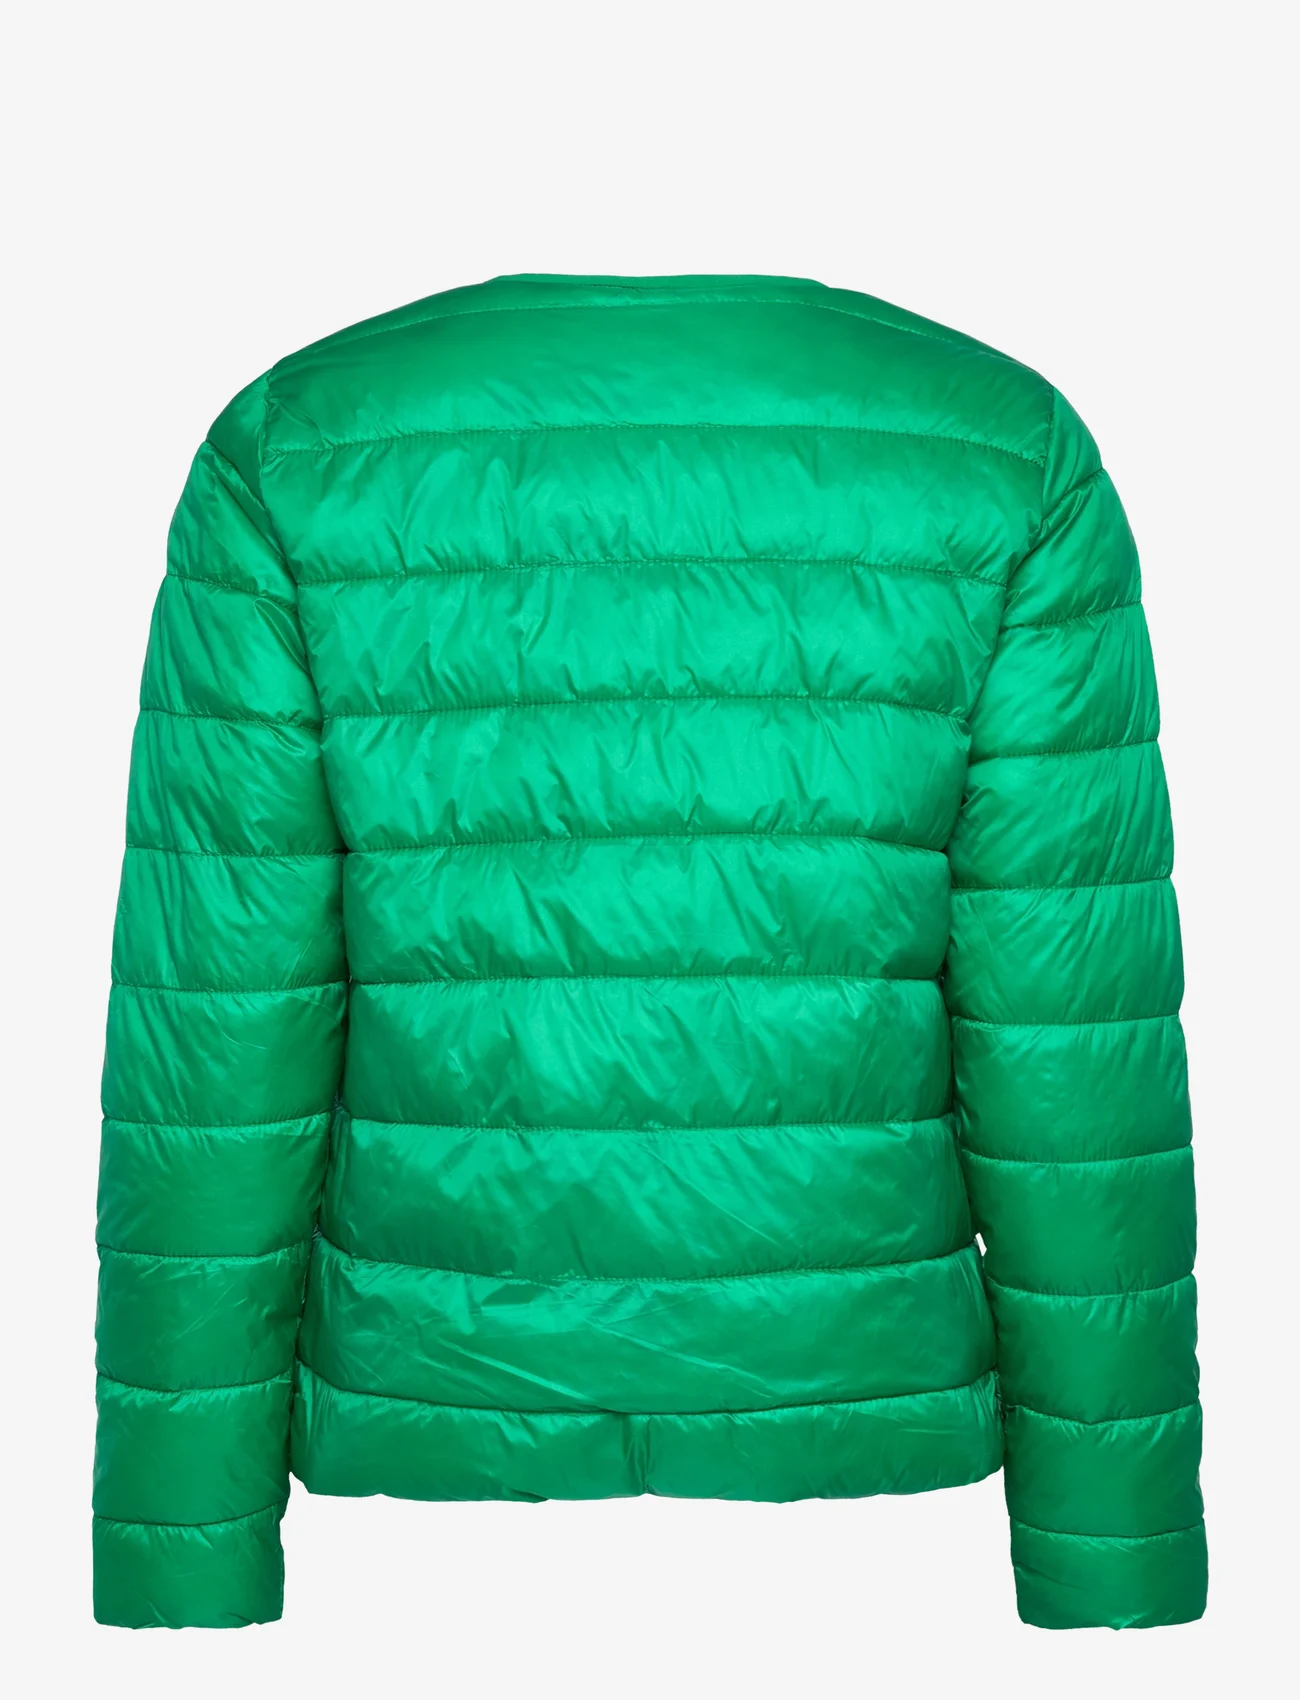 Coster Copenhagen - CC Heart EMMA reversable quilted ja - spring jackets - emerald green - 1